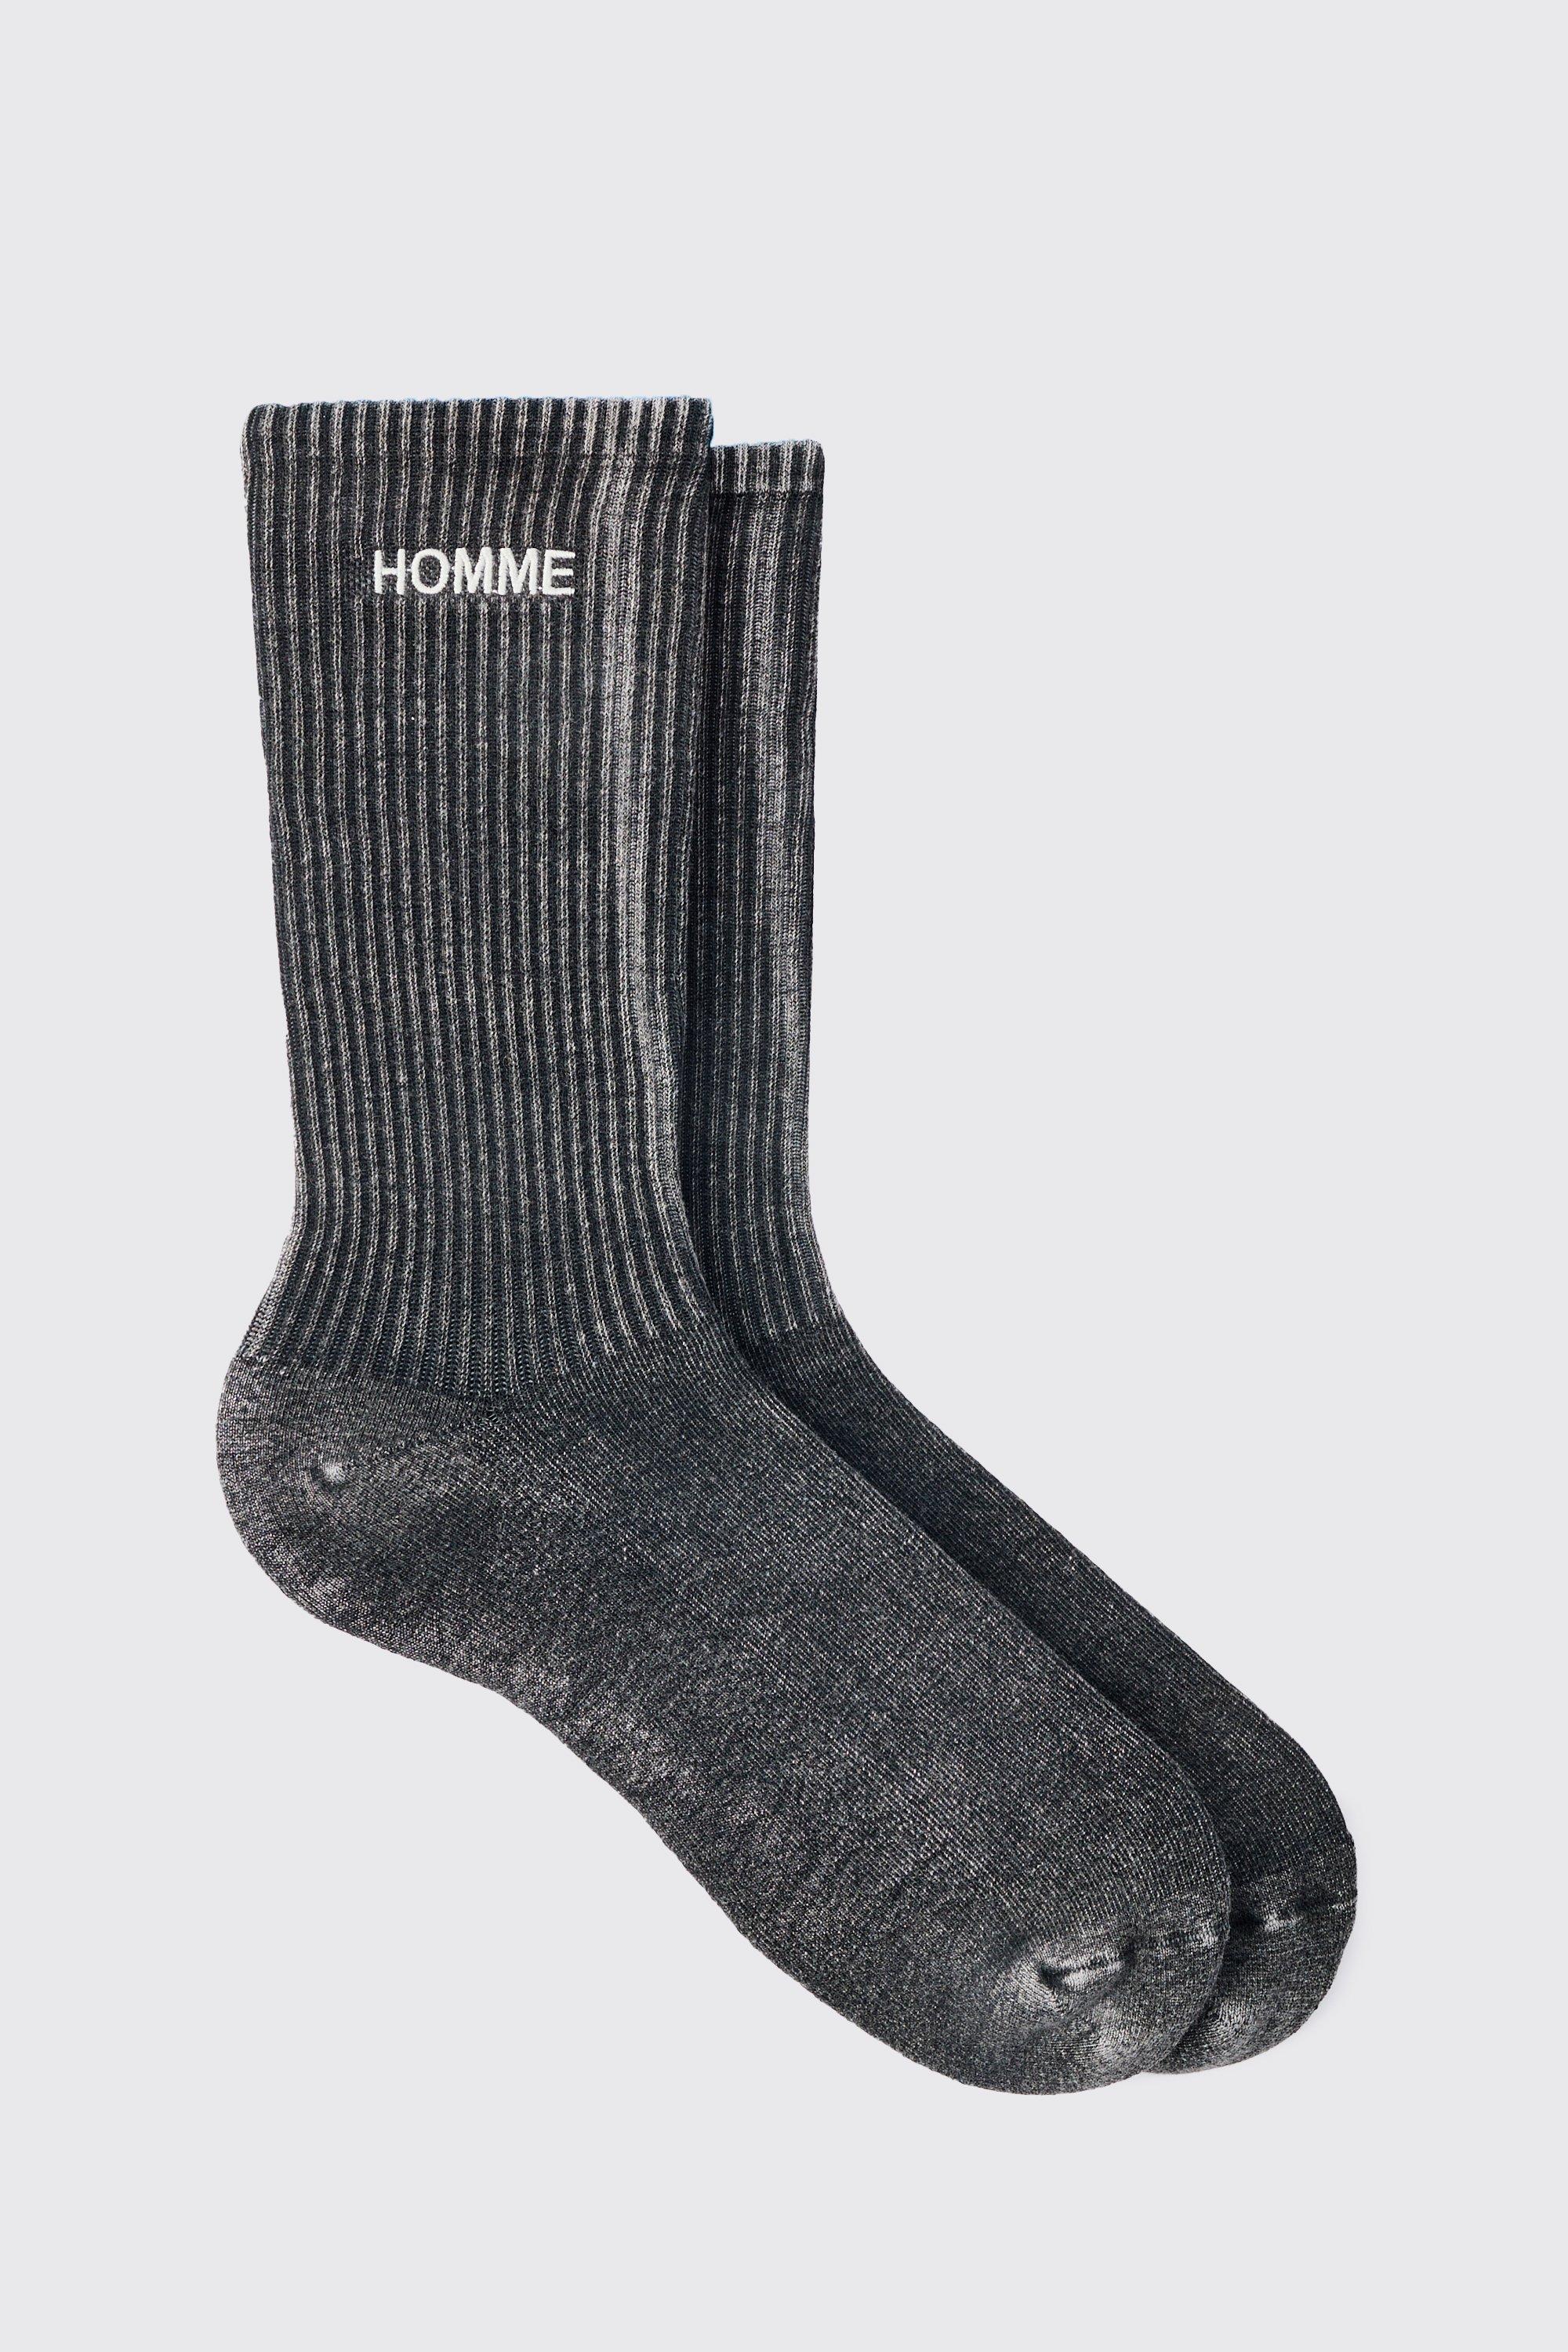 Image of Homme Overdyed Grey Socks, Grigio